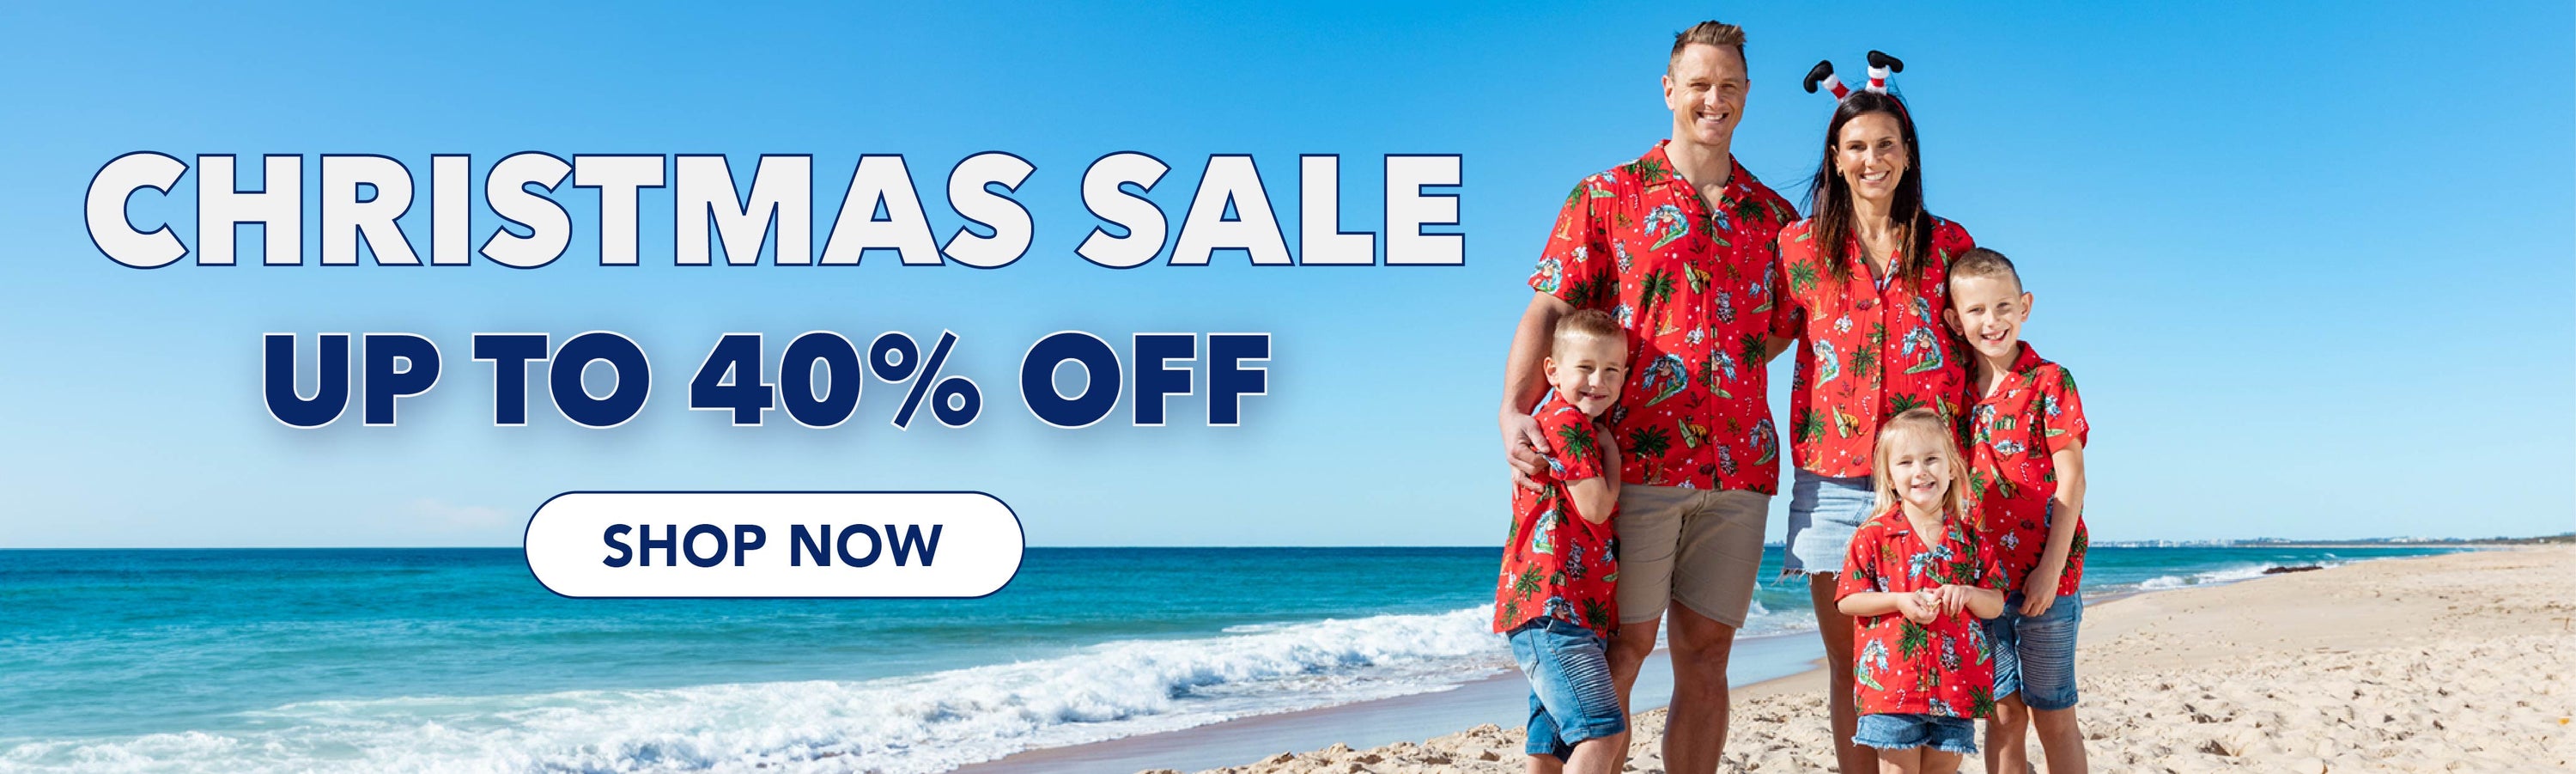 christmas clothing australia shirts hawaiian family matching outfits sale cheap aussie xmas festive island style clothing